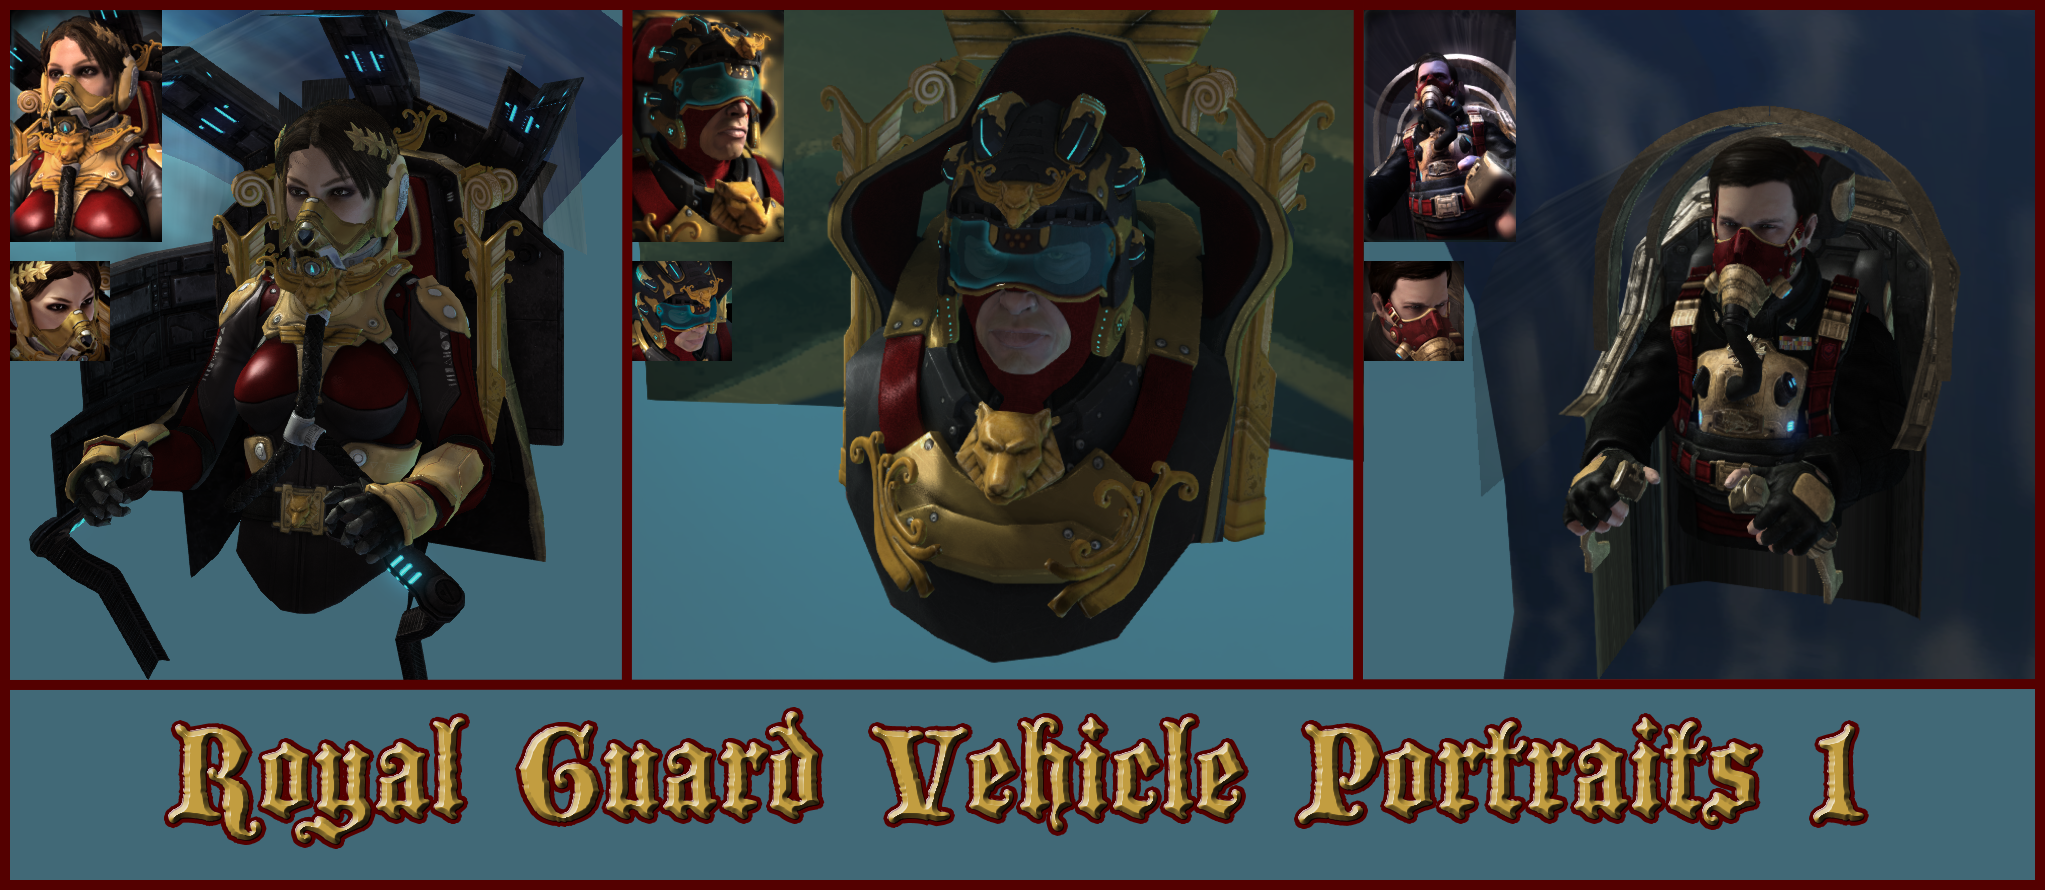 Royal Guard Vehicle Portraits Pack 1